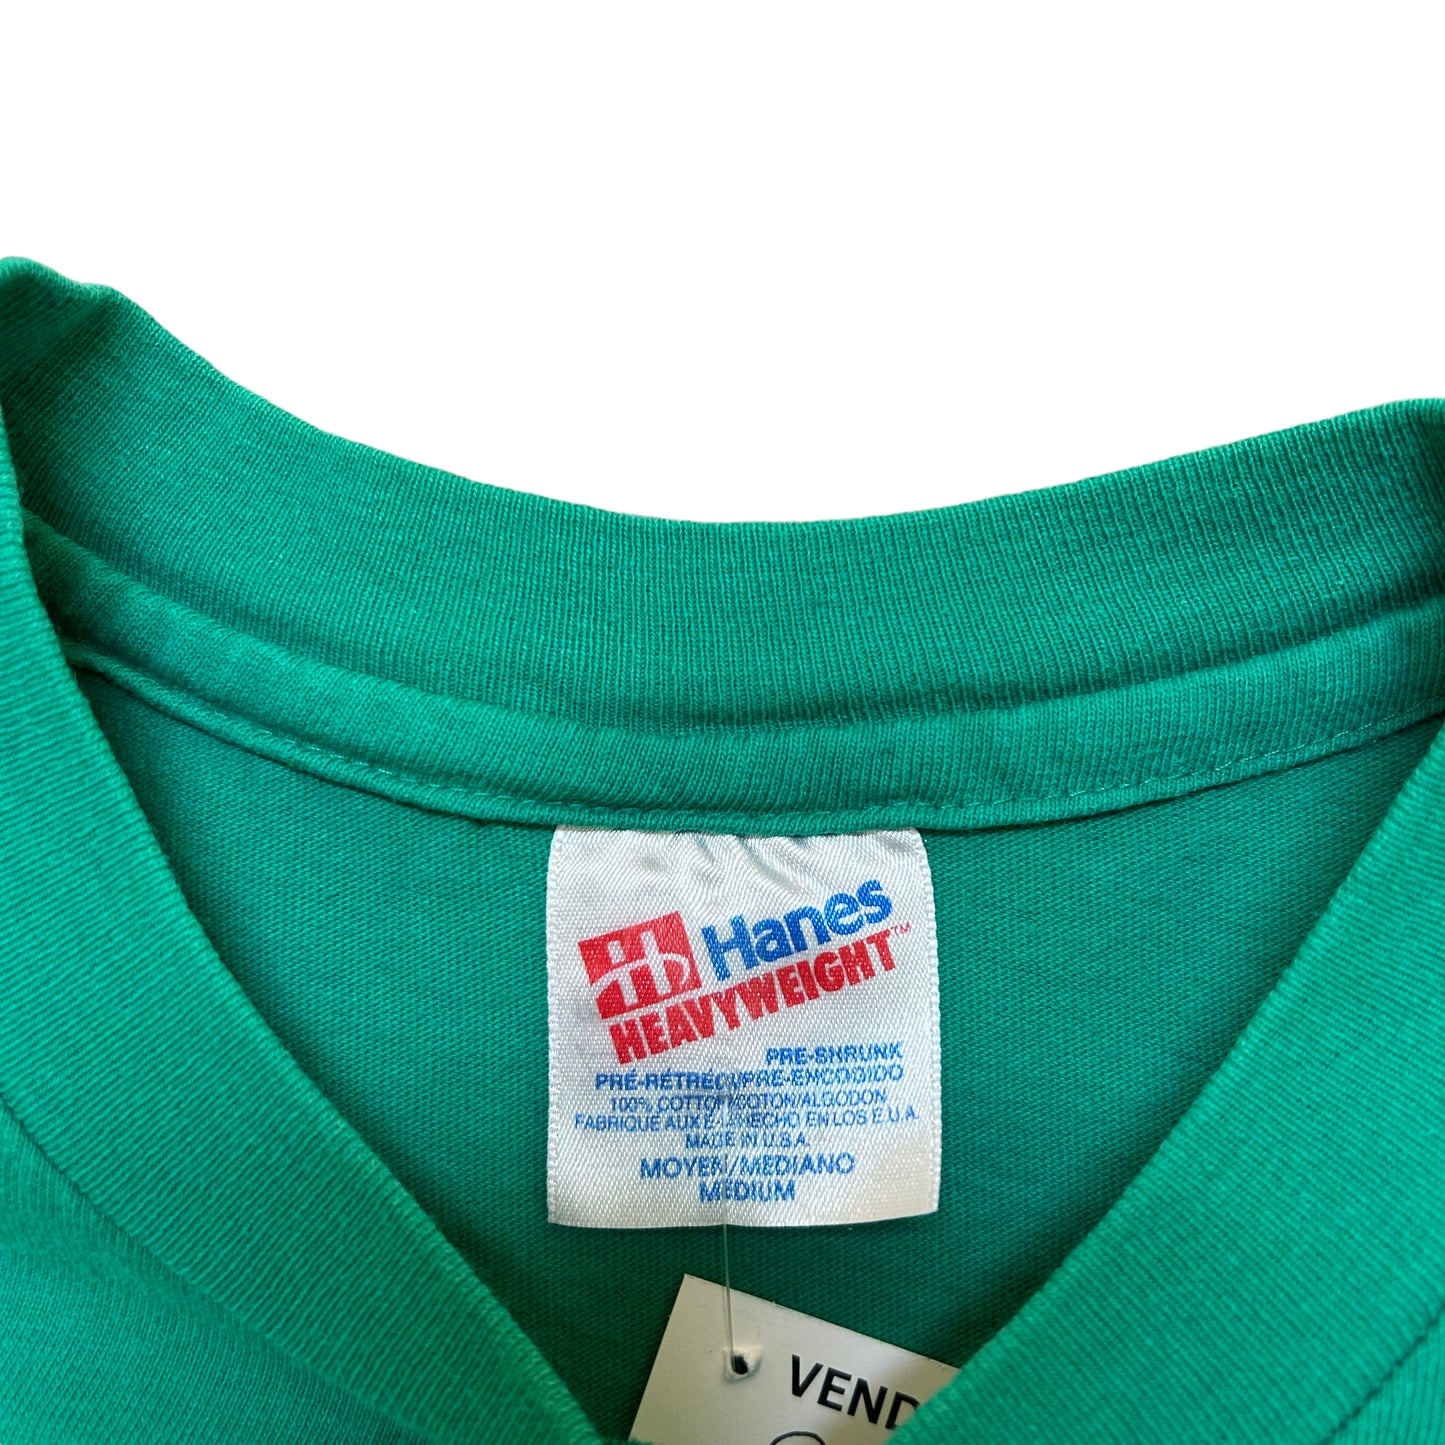 Vintage 1990s Boston Celtics Green Graphic T-Shirt - Size Medium